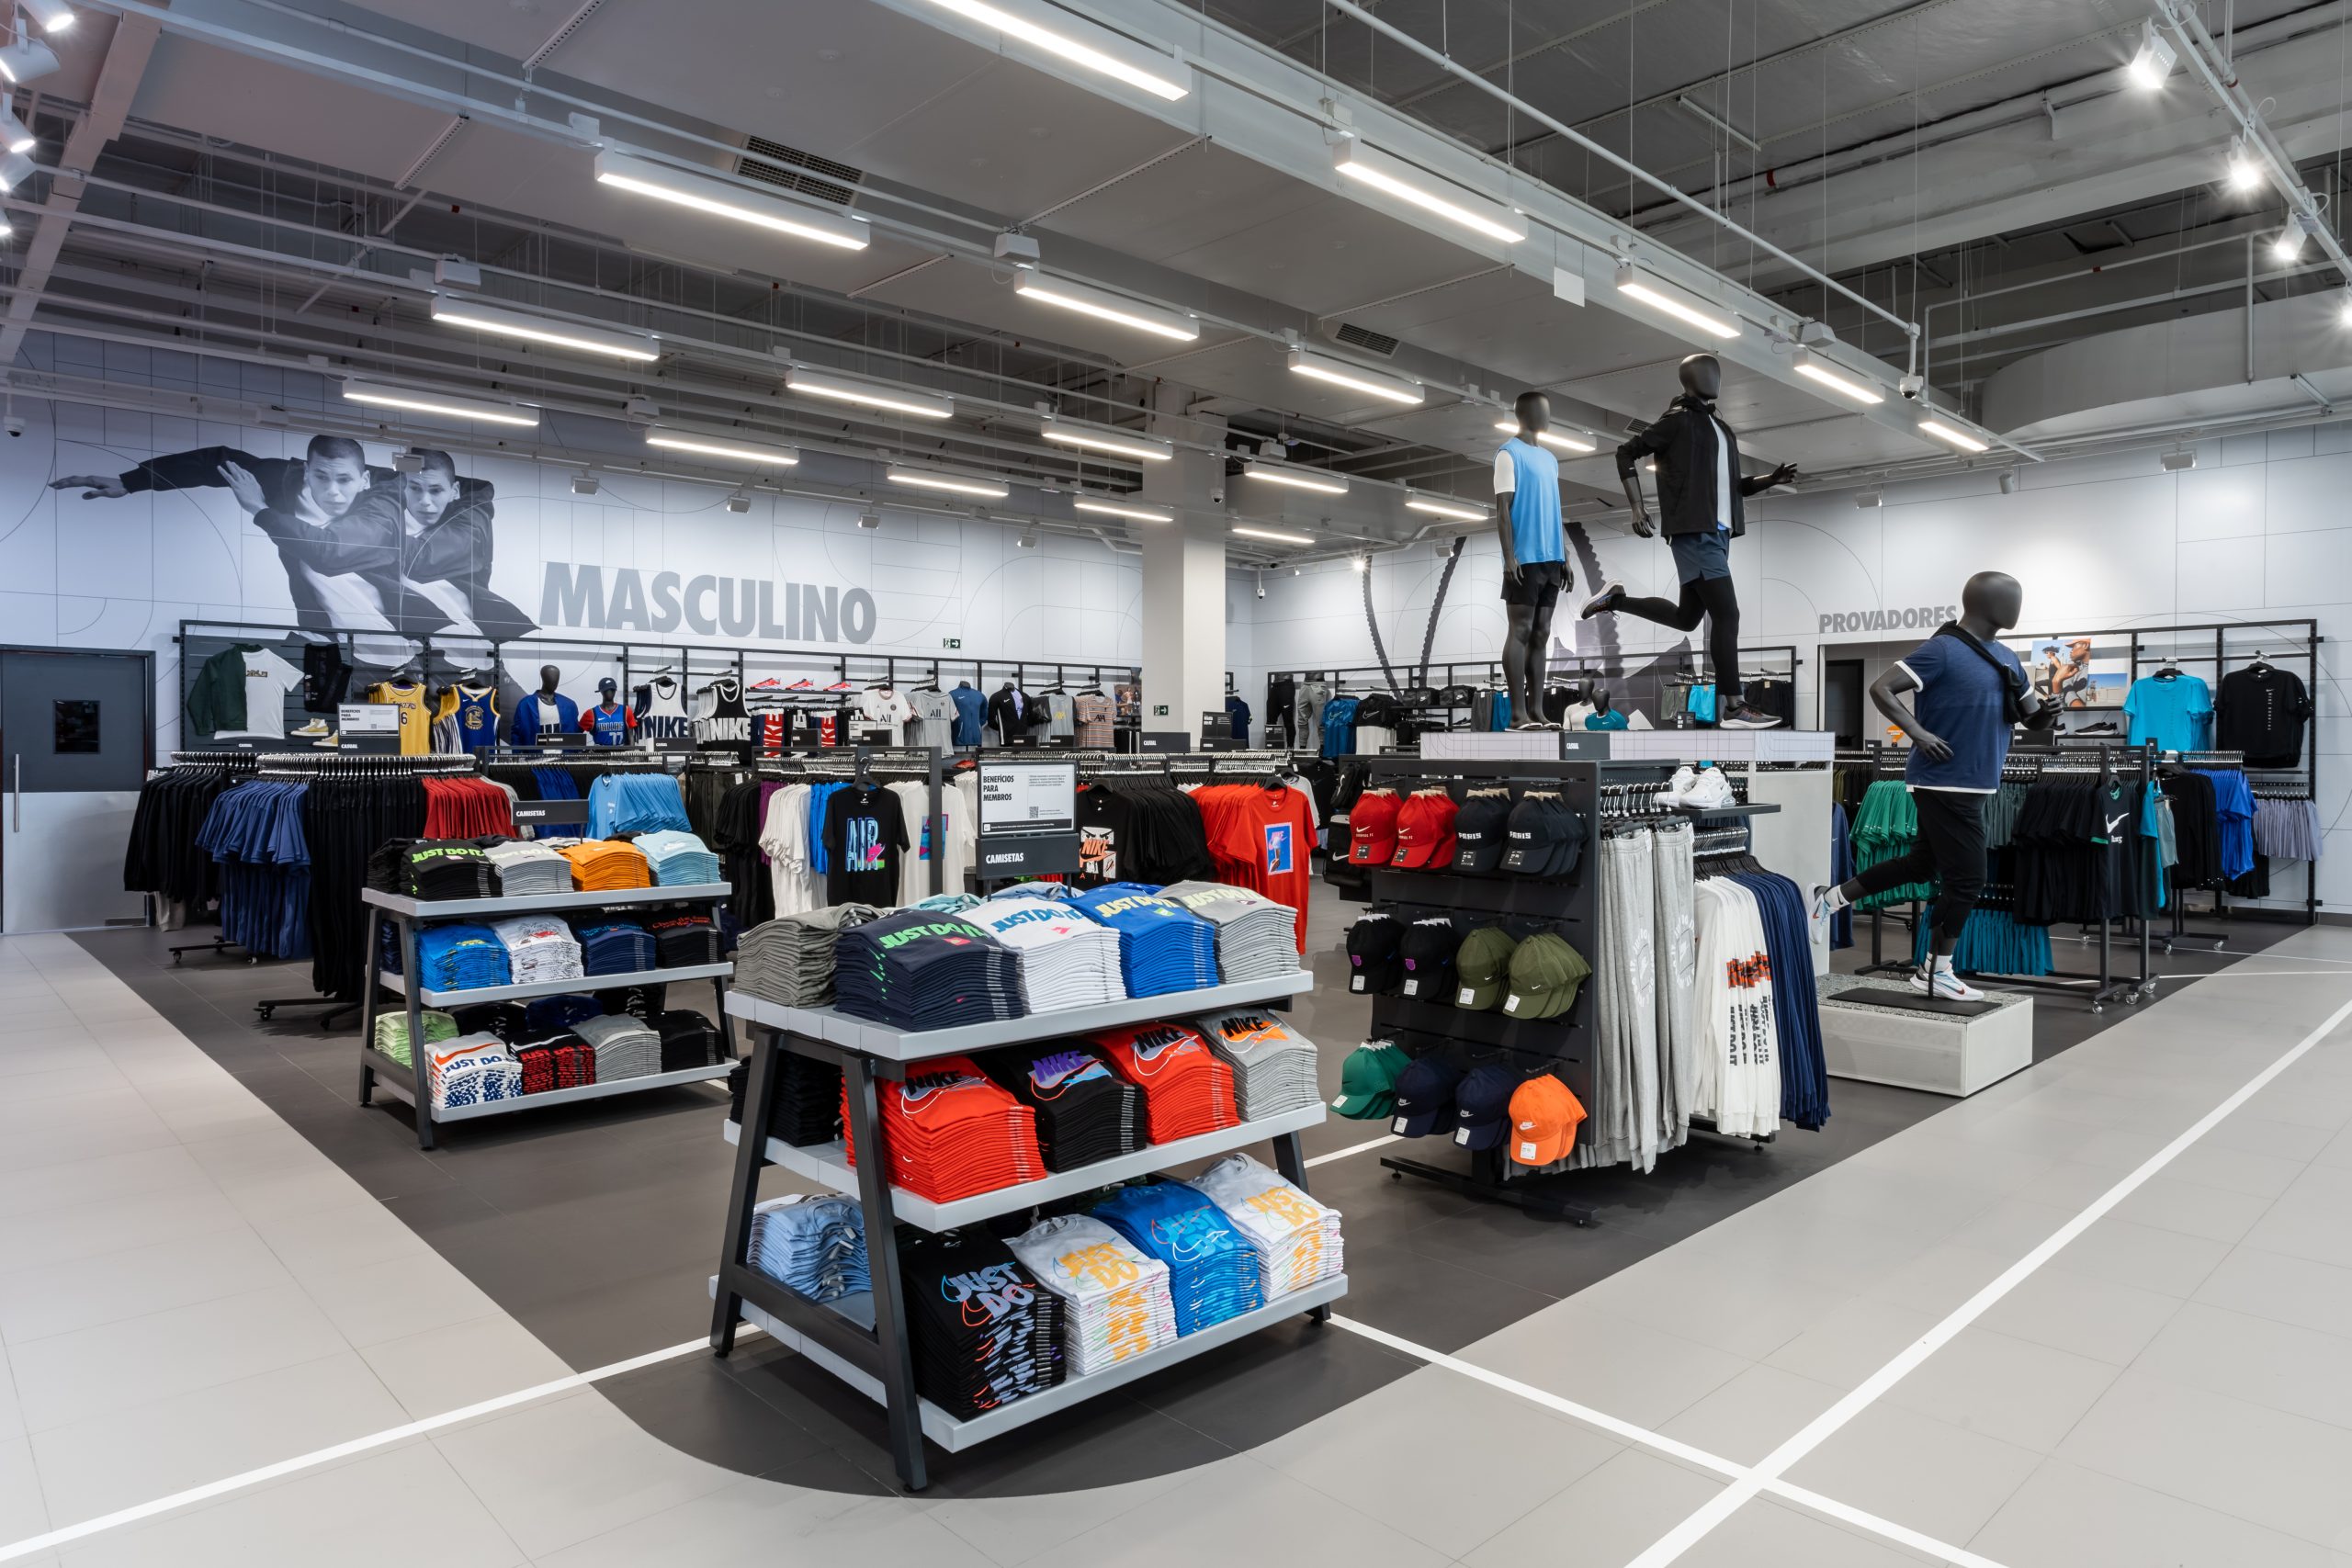 Nike nova loja no shopping Aricanduva, em São Paulo – : : CidadeMarketing : :